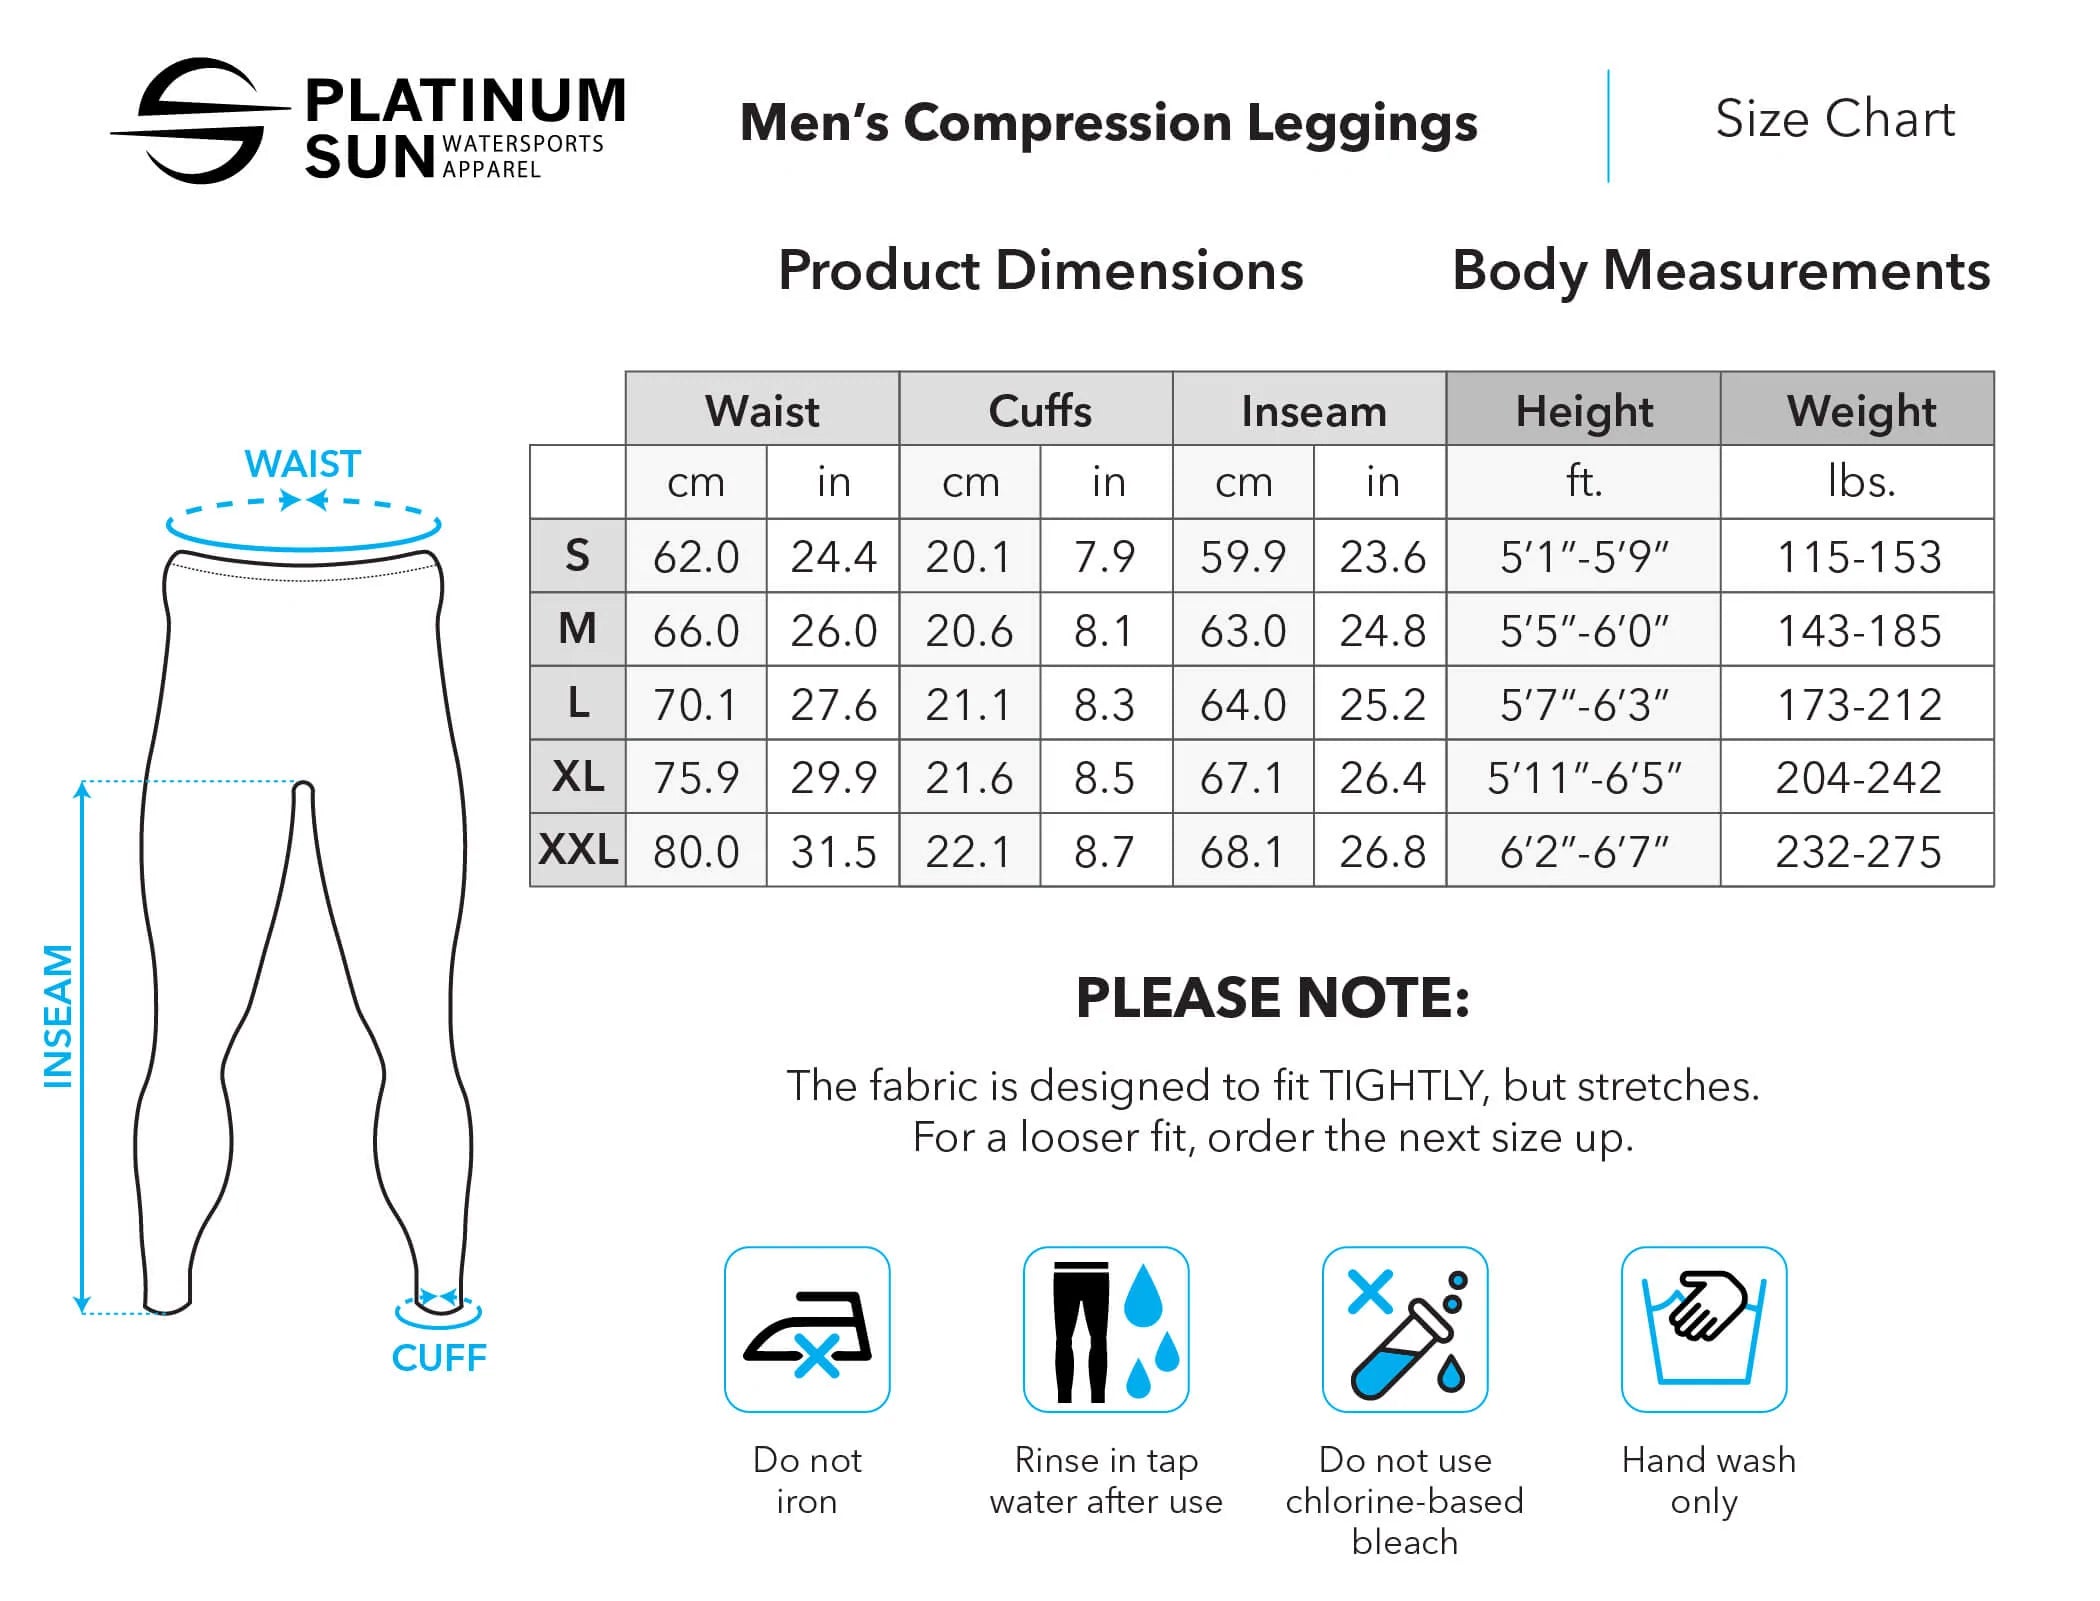 Loxton Leggings Sewing Pattern PDF – Muna and Broad